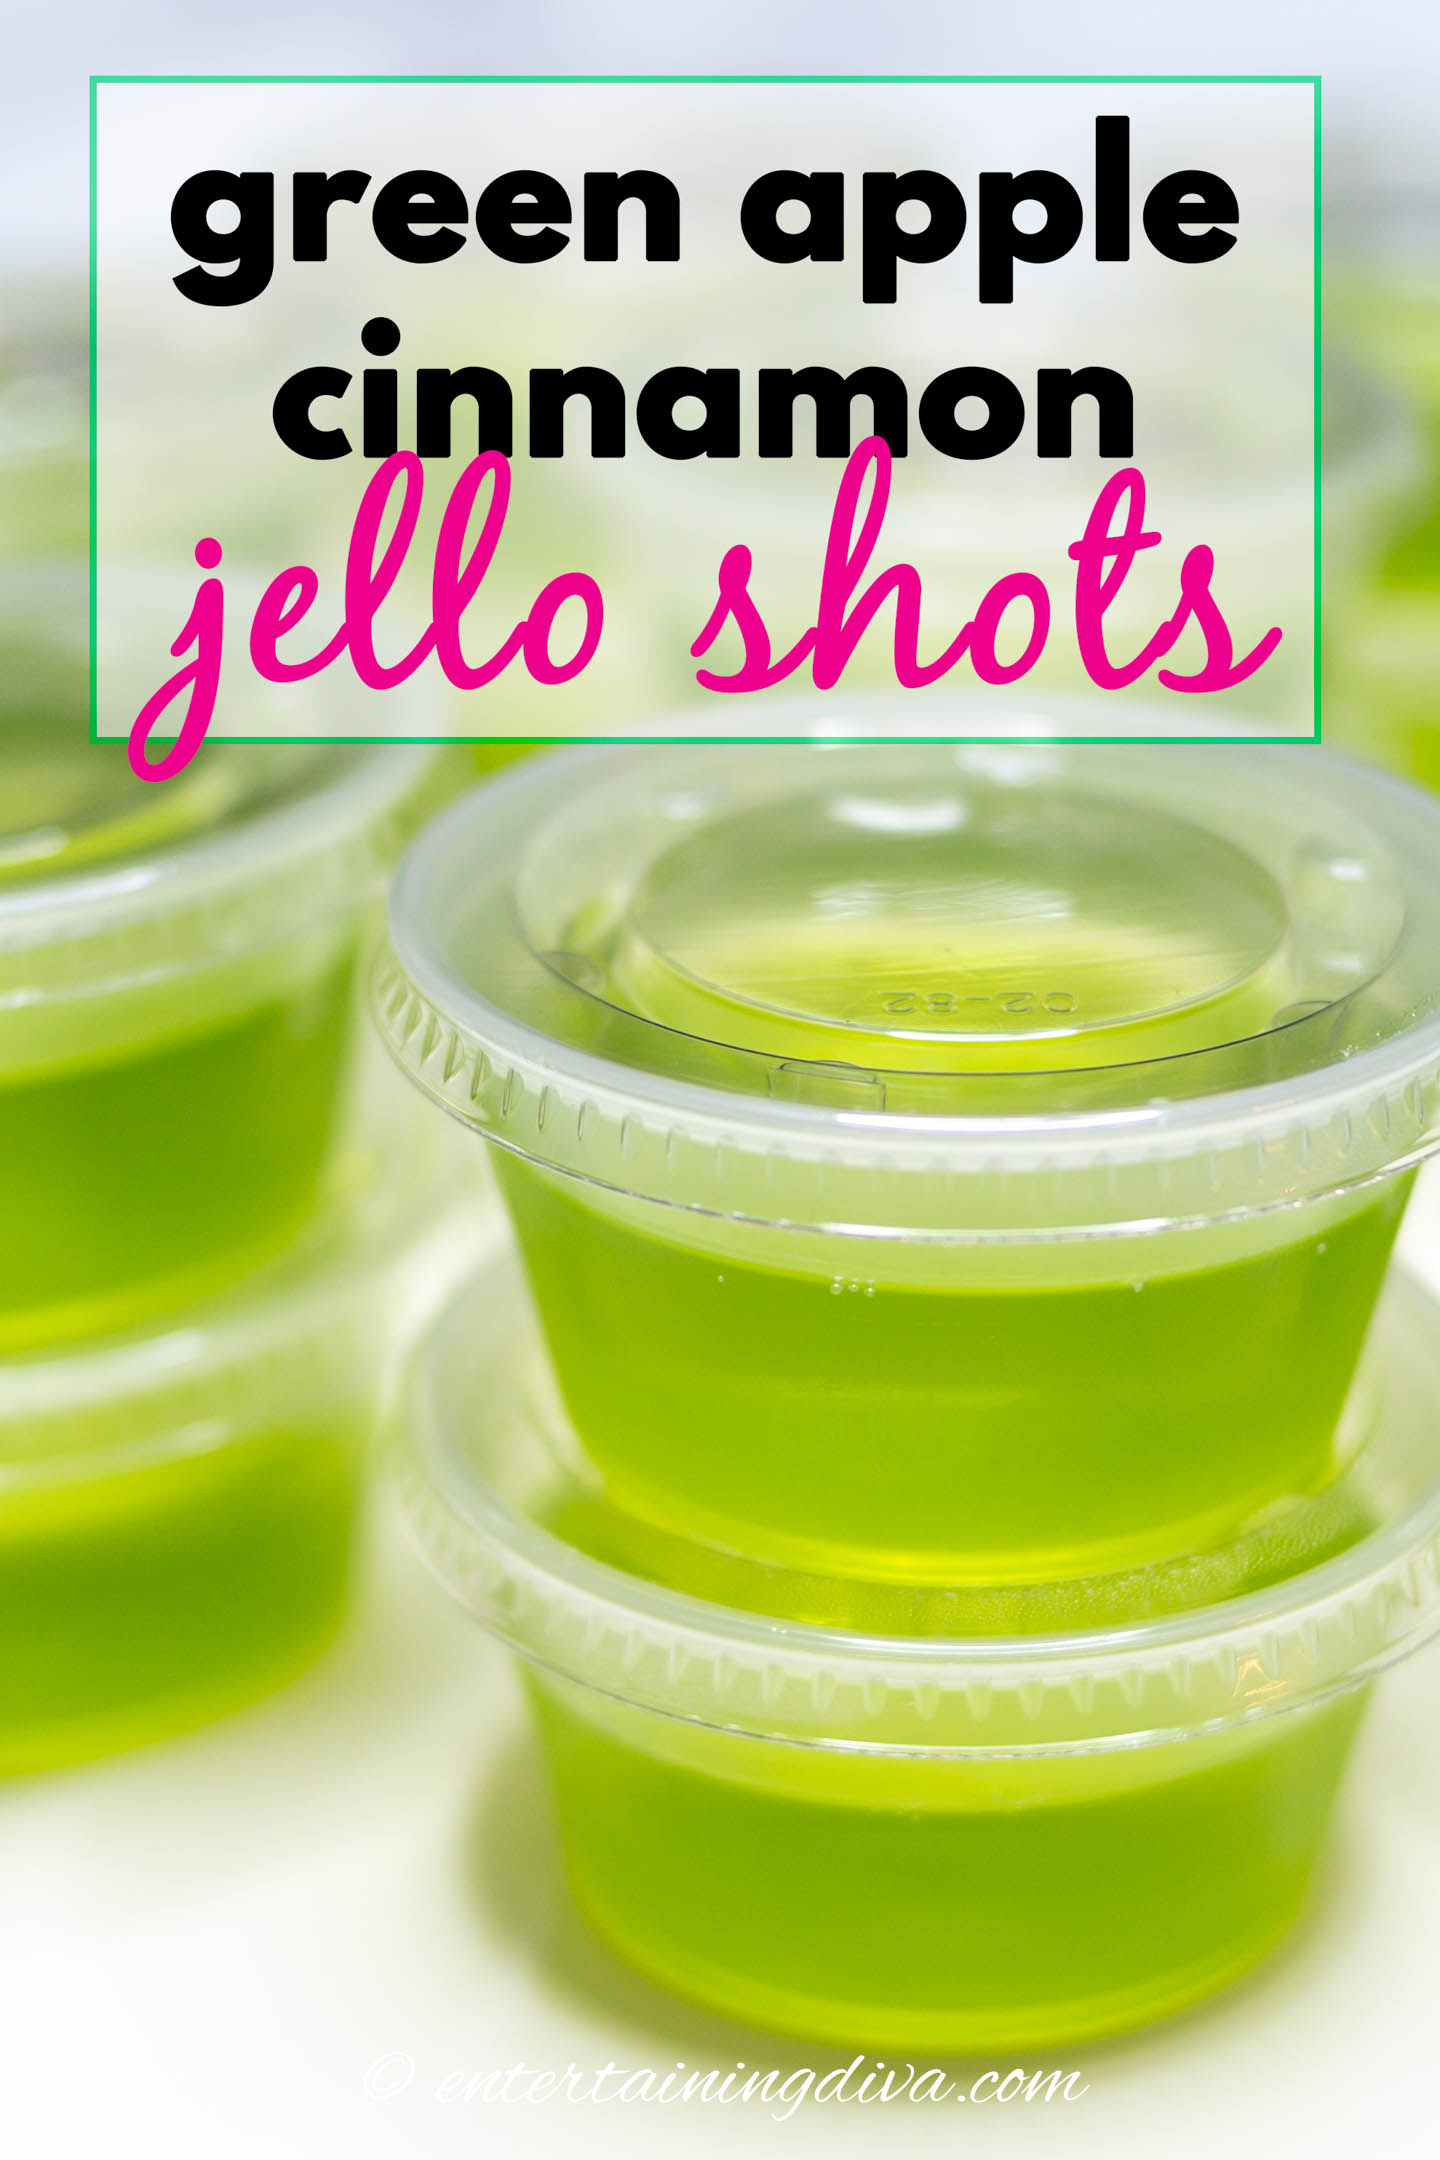 green apple cinnamon fireball jelly shots recipe